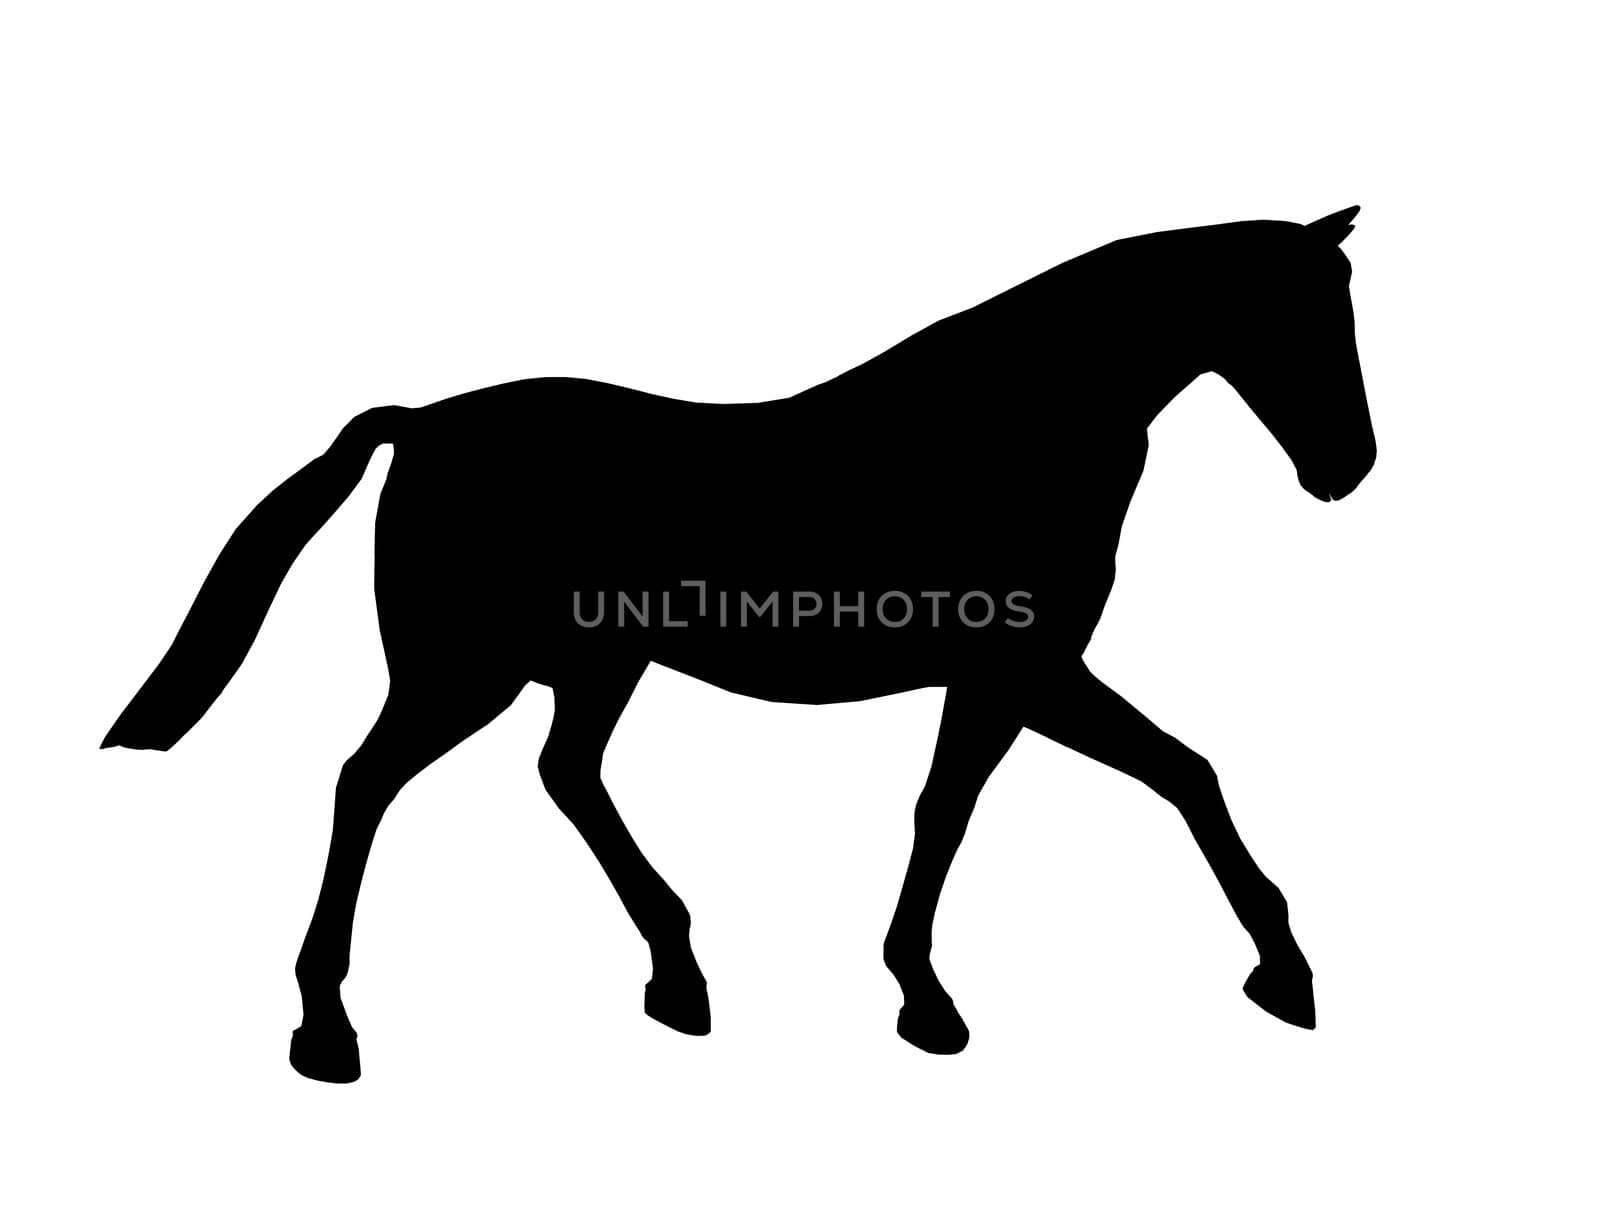 Black horse art illustration silhouette on a white background